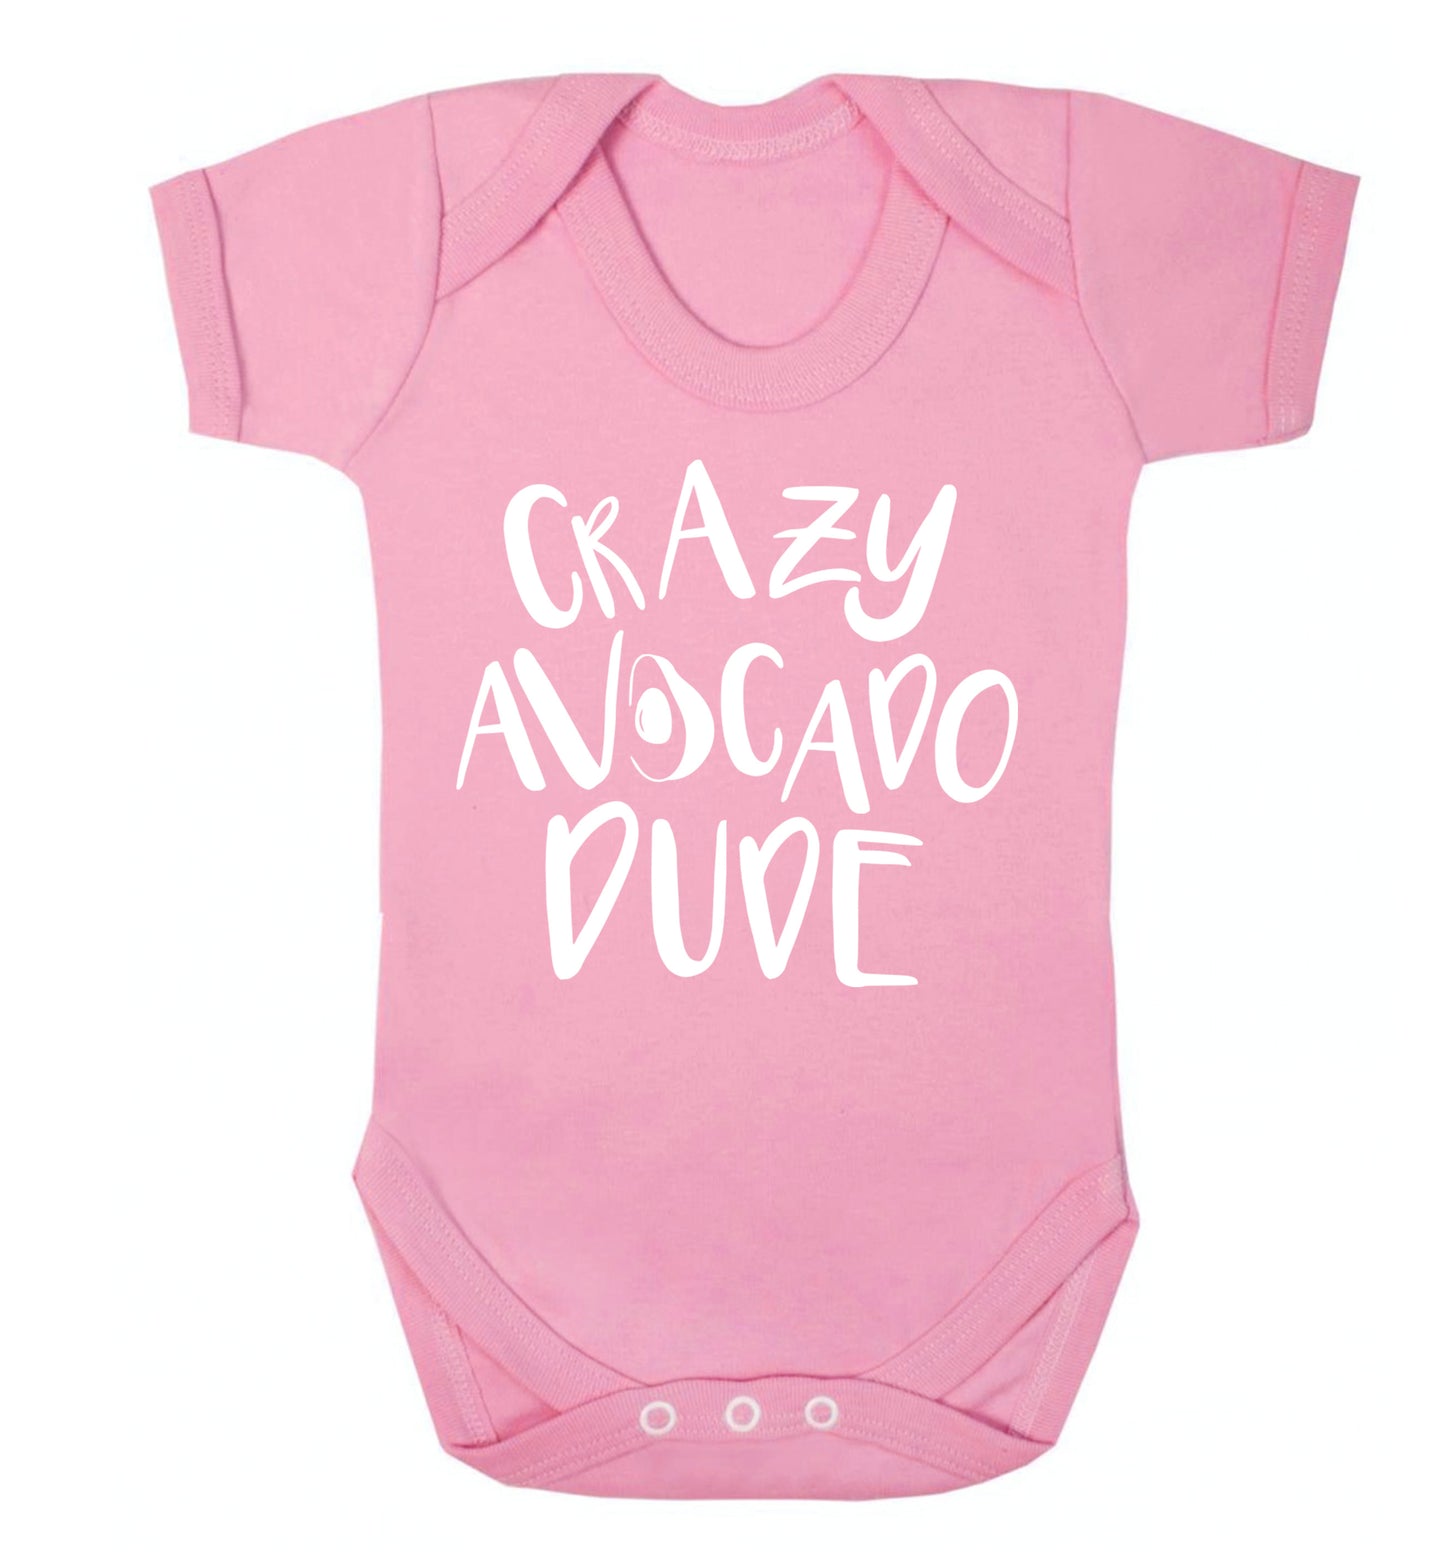 Crazy avocado dude Baby Vest pale pink 18-24 months